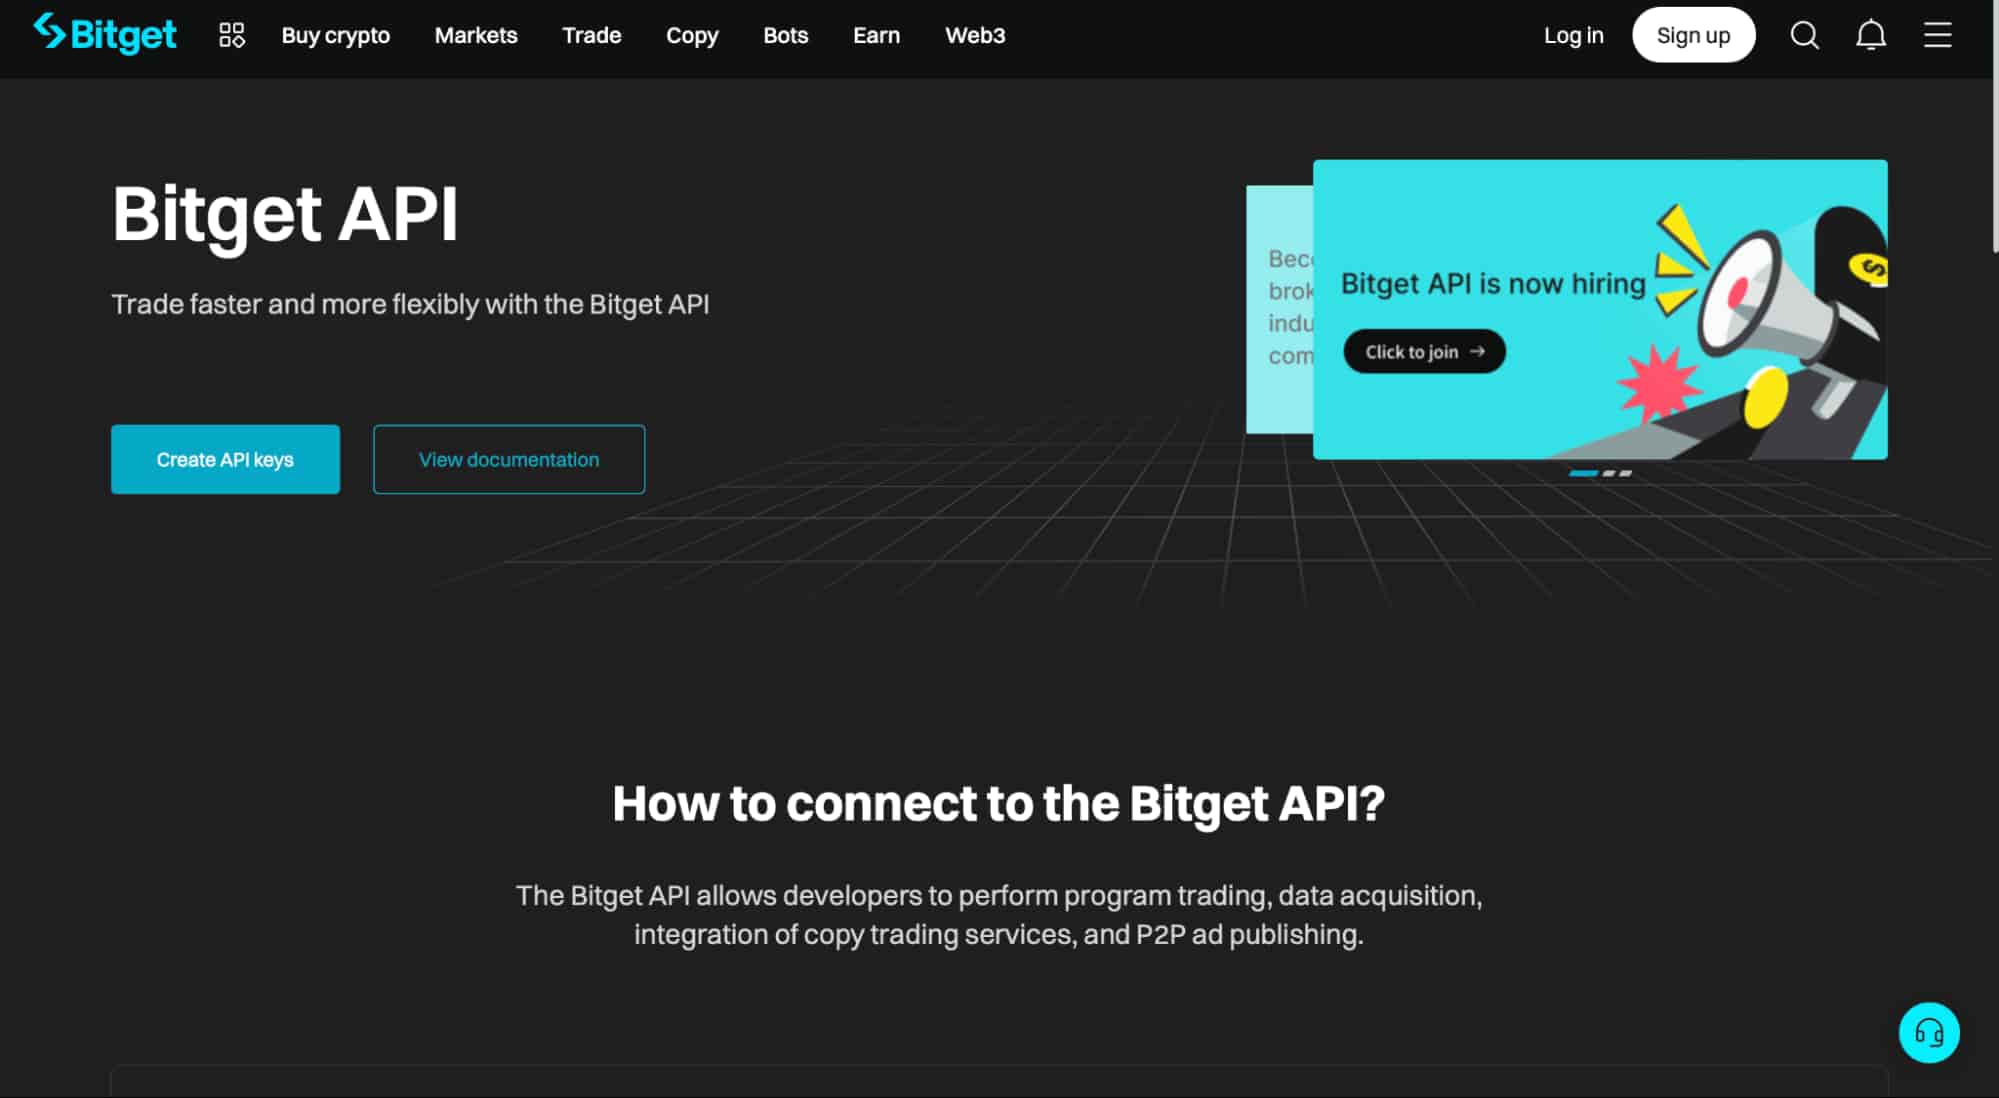 Bitget API - Trade faster and more flexibly with the Bitget API